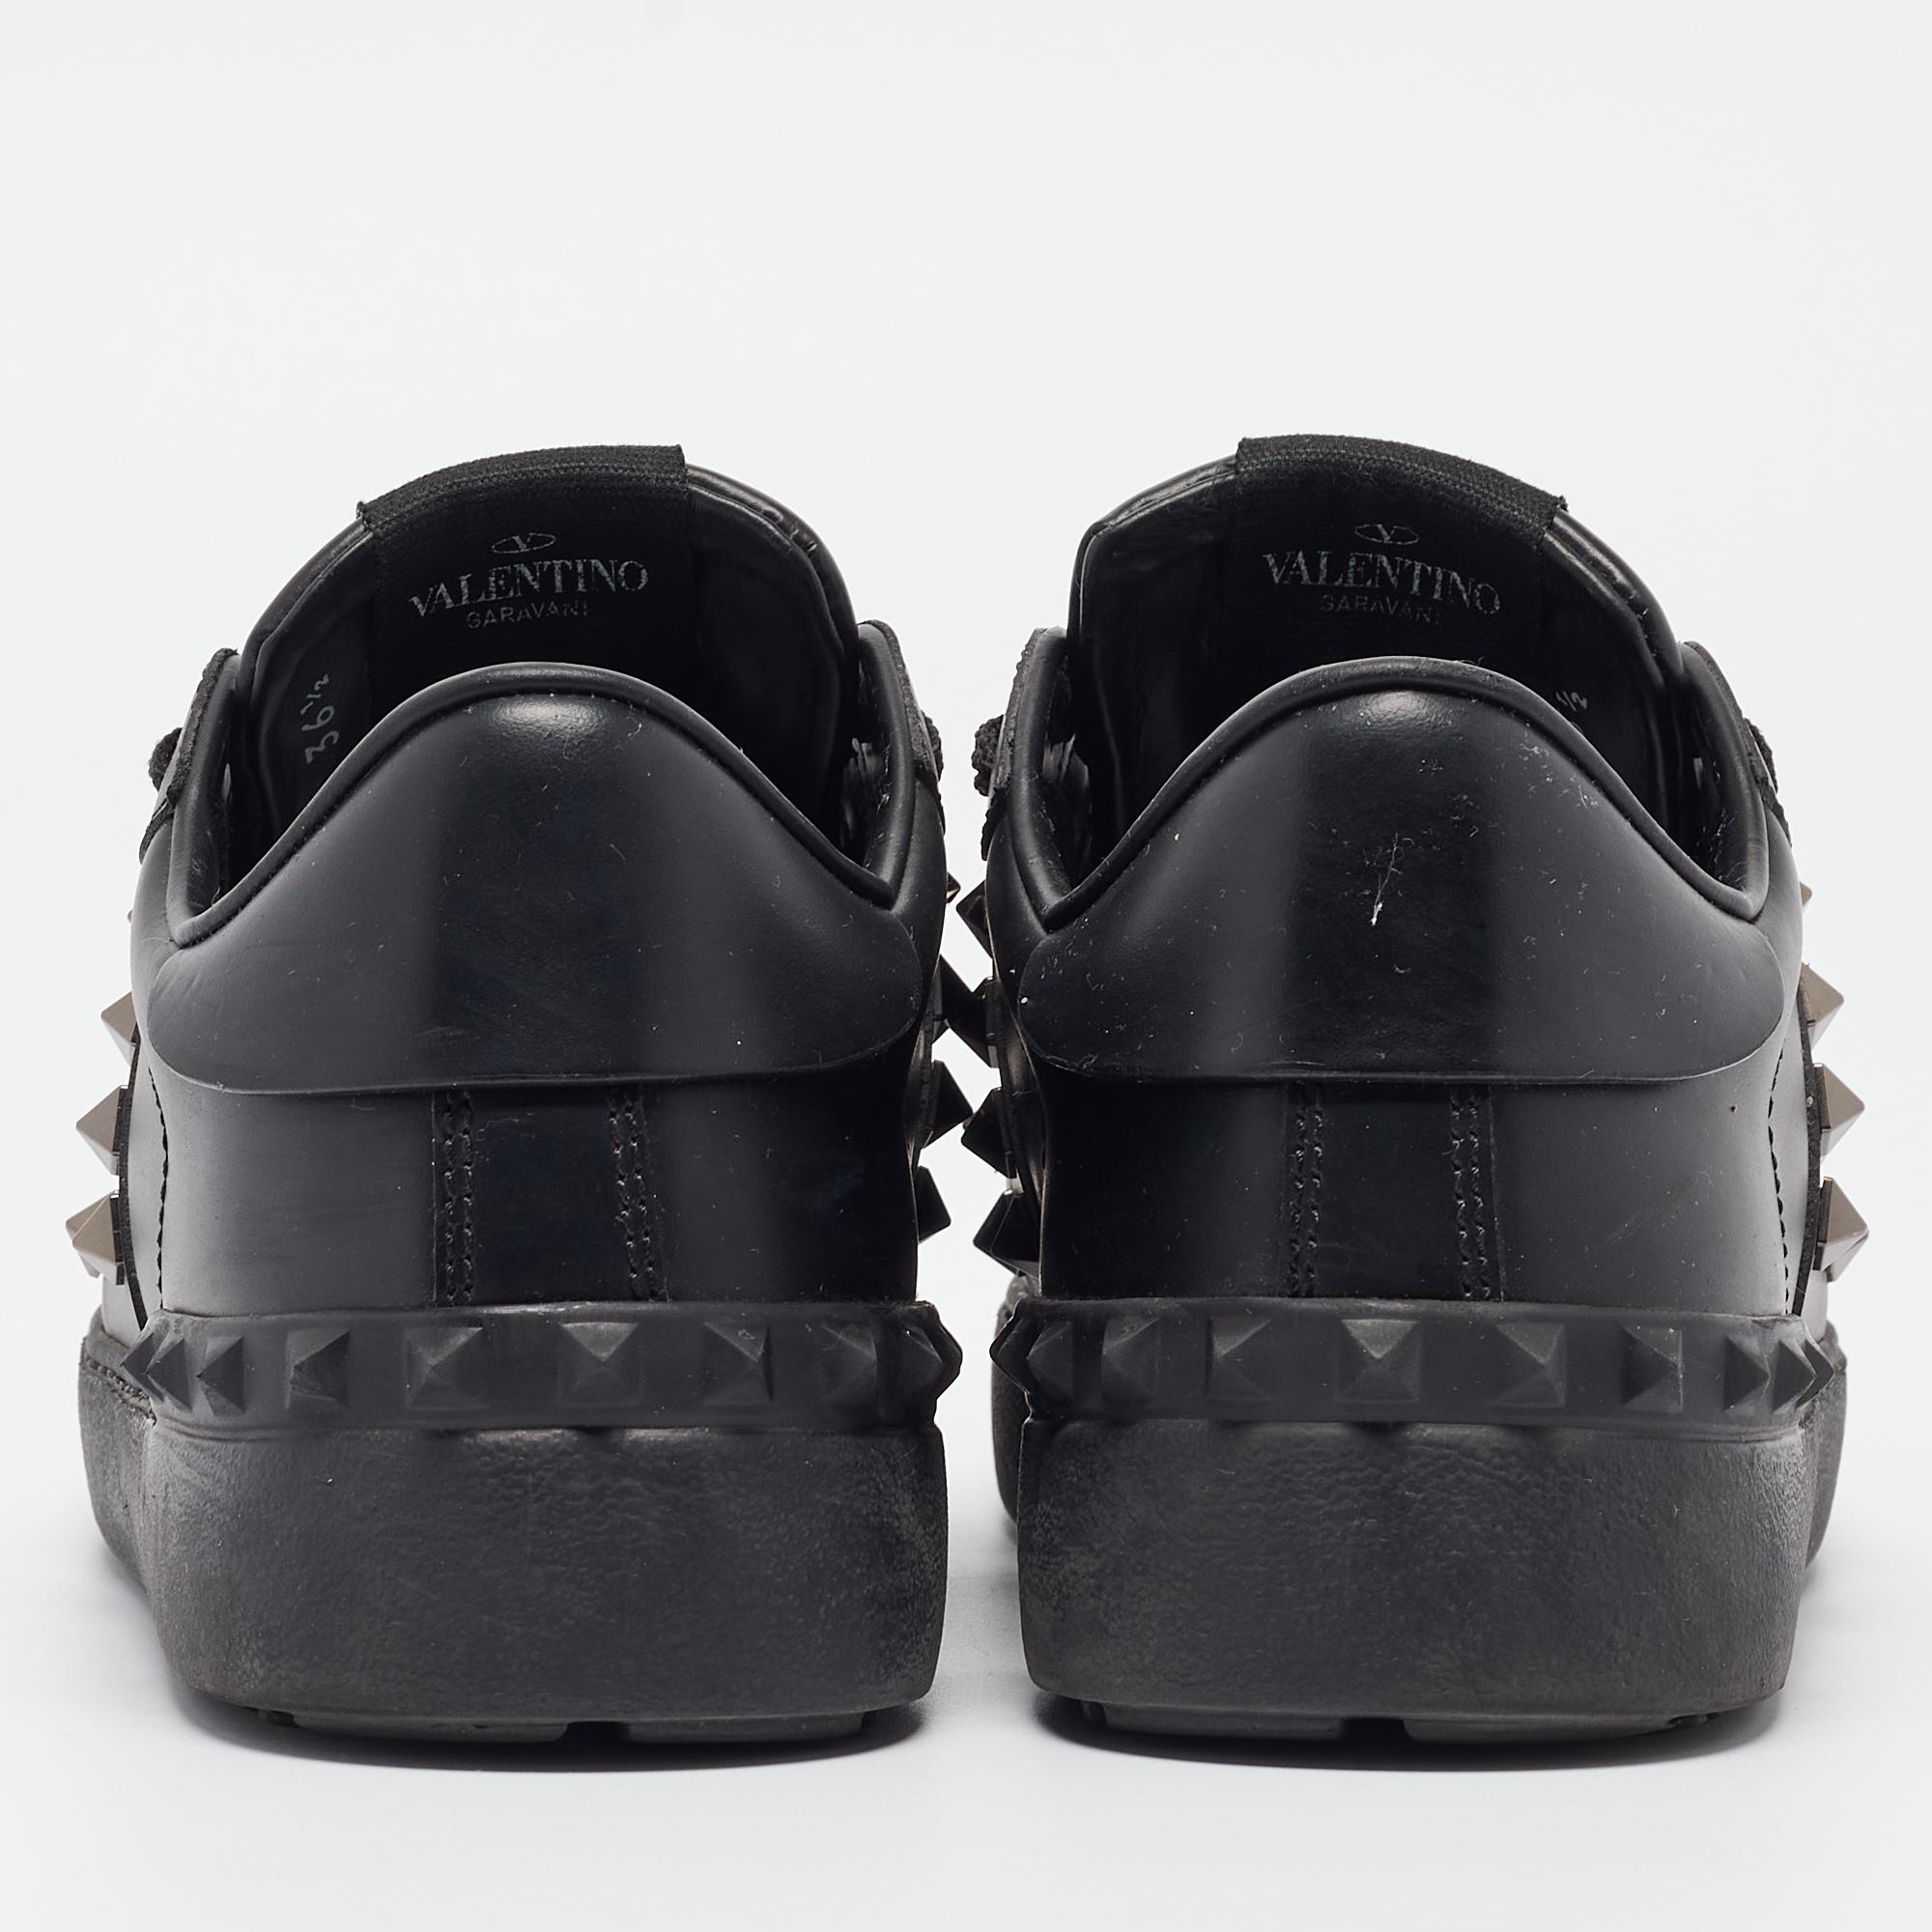 Valentino Black Leather Rockstud Low Top Sneakers Size 36.5 In Good Condition For Sale In Dubai, Al Qouz 2